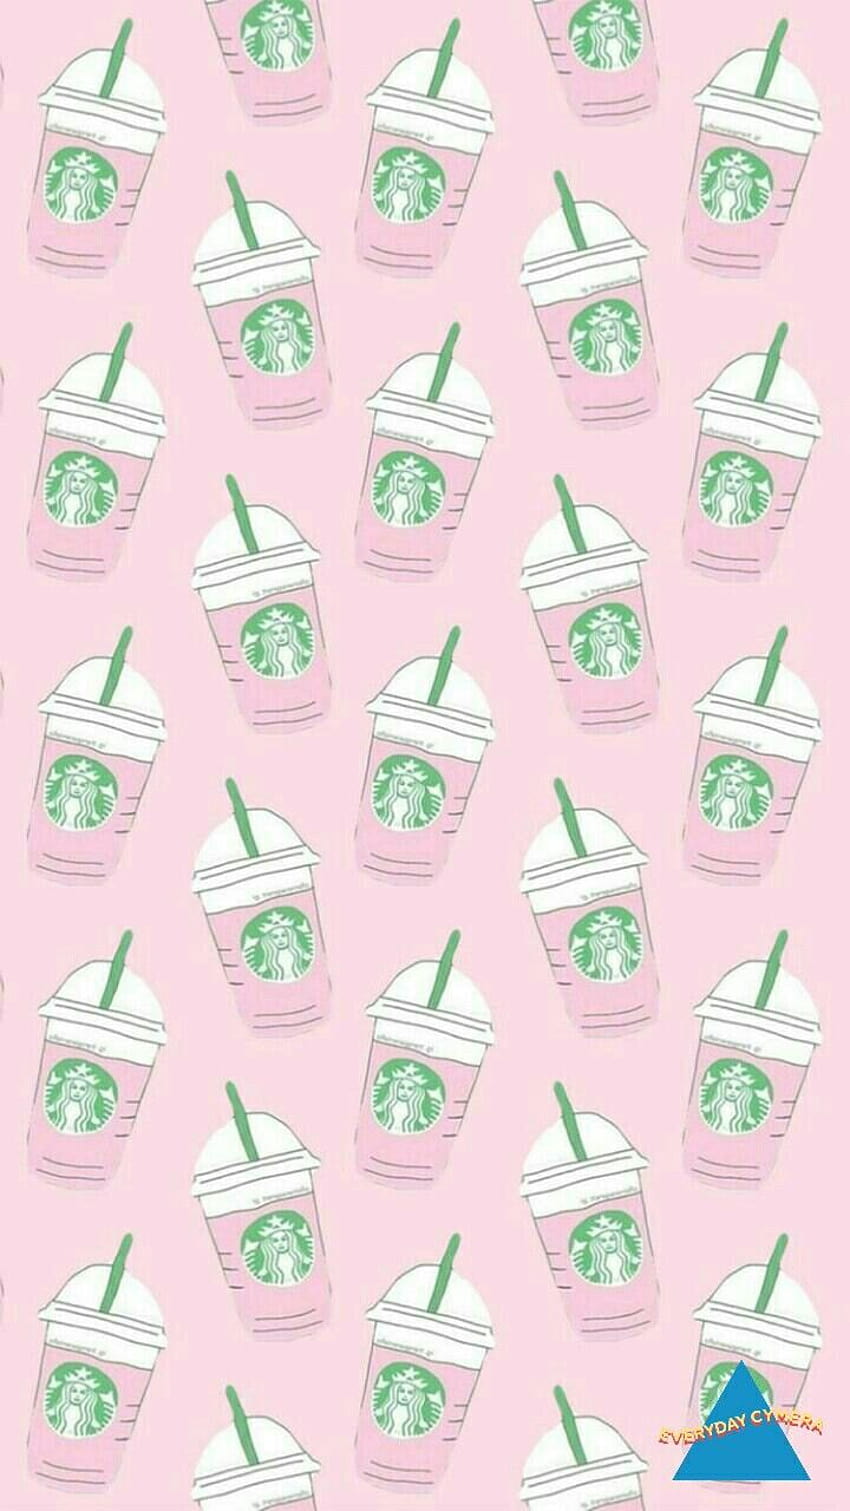 Starbucks coffee cup pattern on pink background - Starbucks